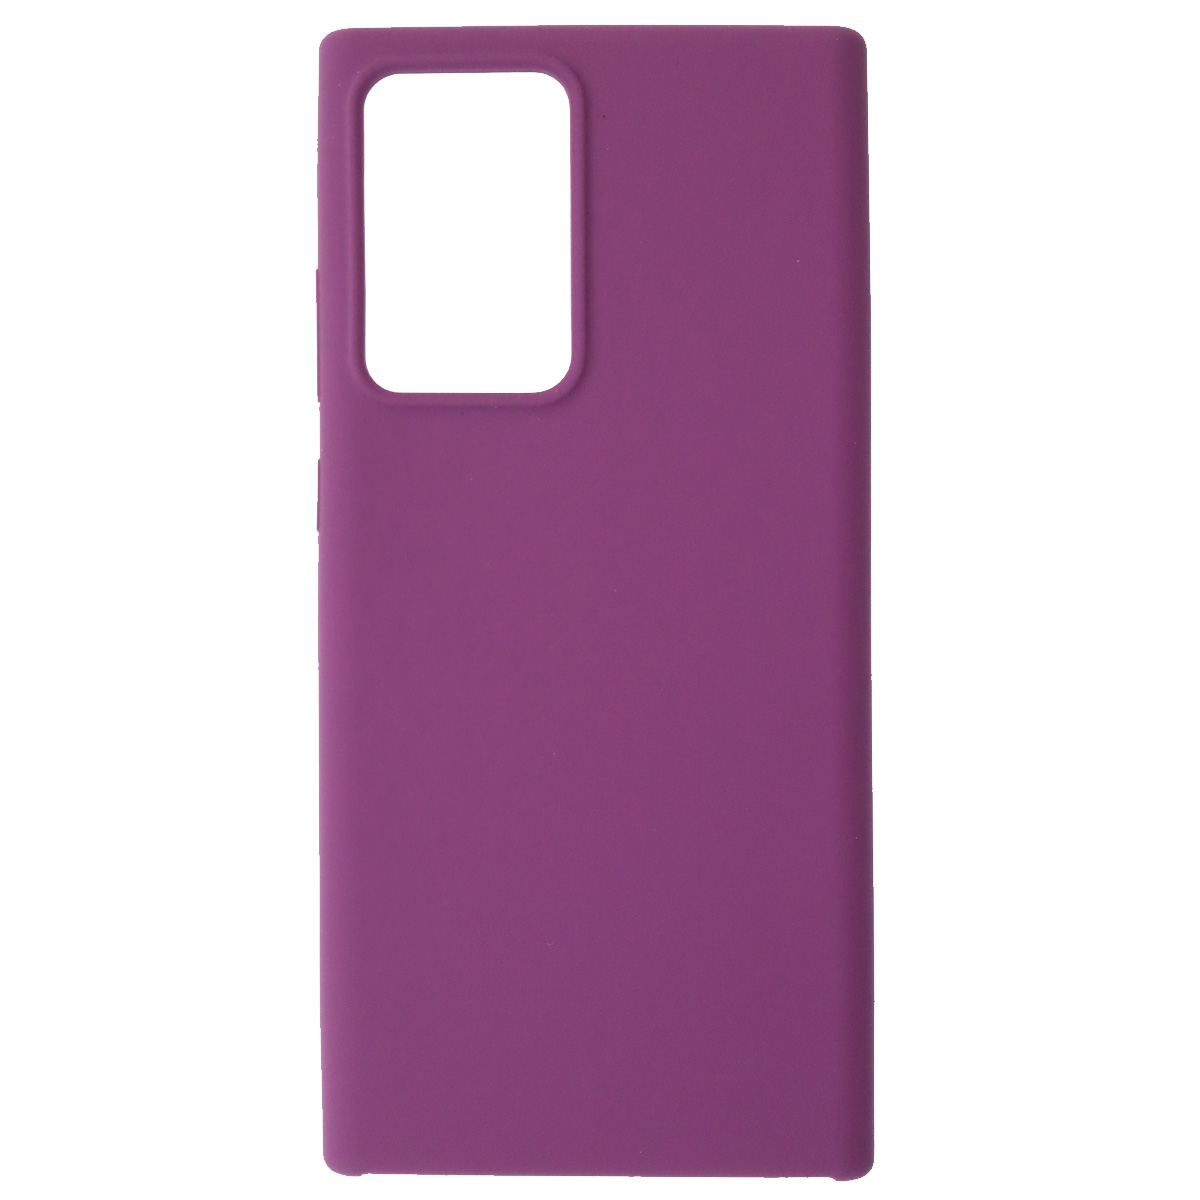 Чехол накладка Silicon Cover для SAMSUNG Galaxy Note 20 Ultra (SM-N9860), силикон, бархат, цвет фиолетовый